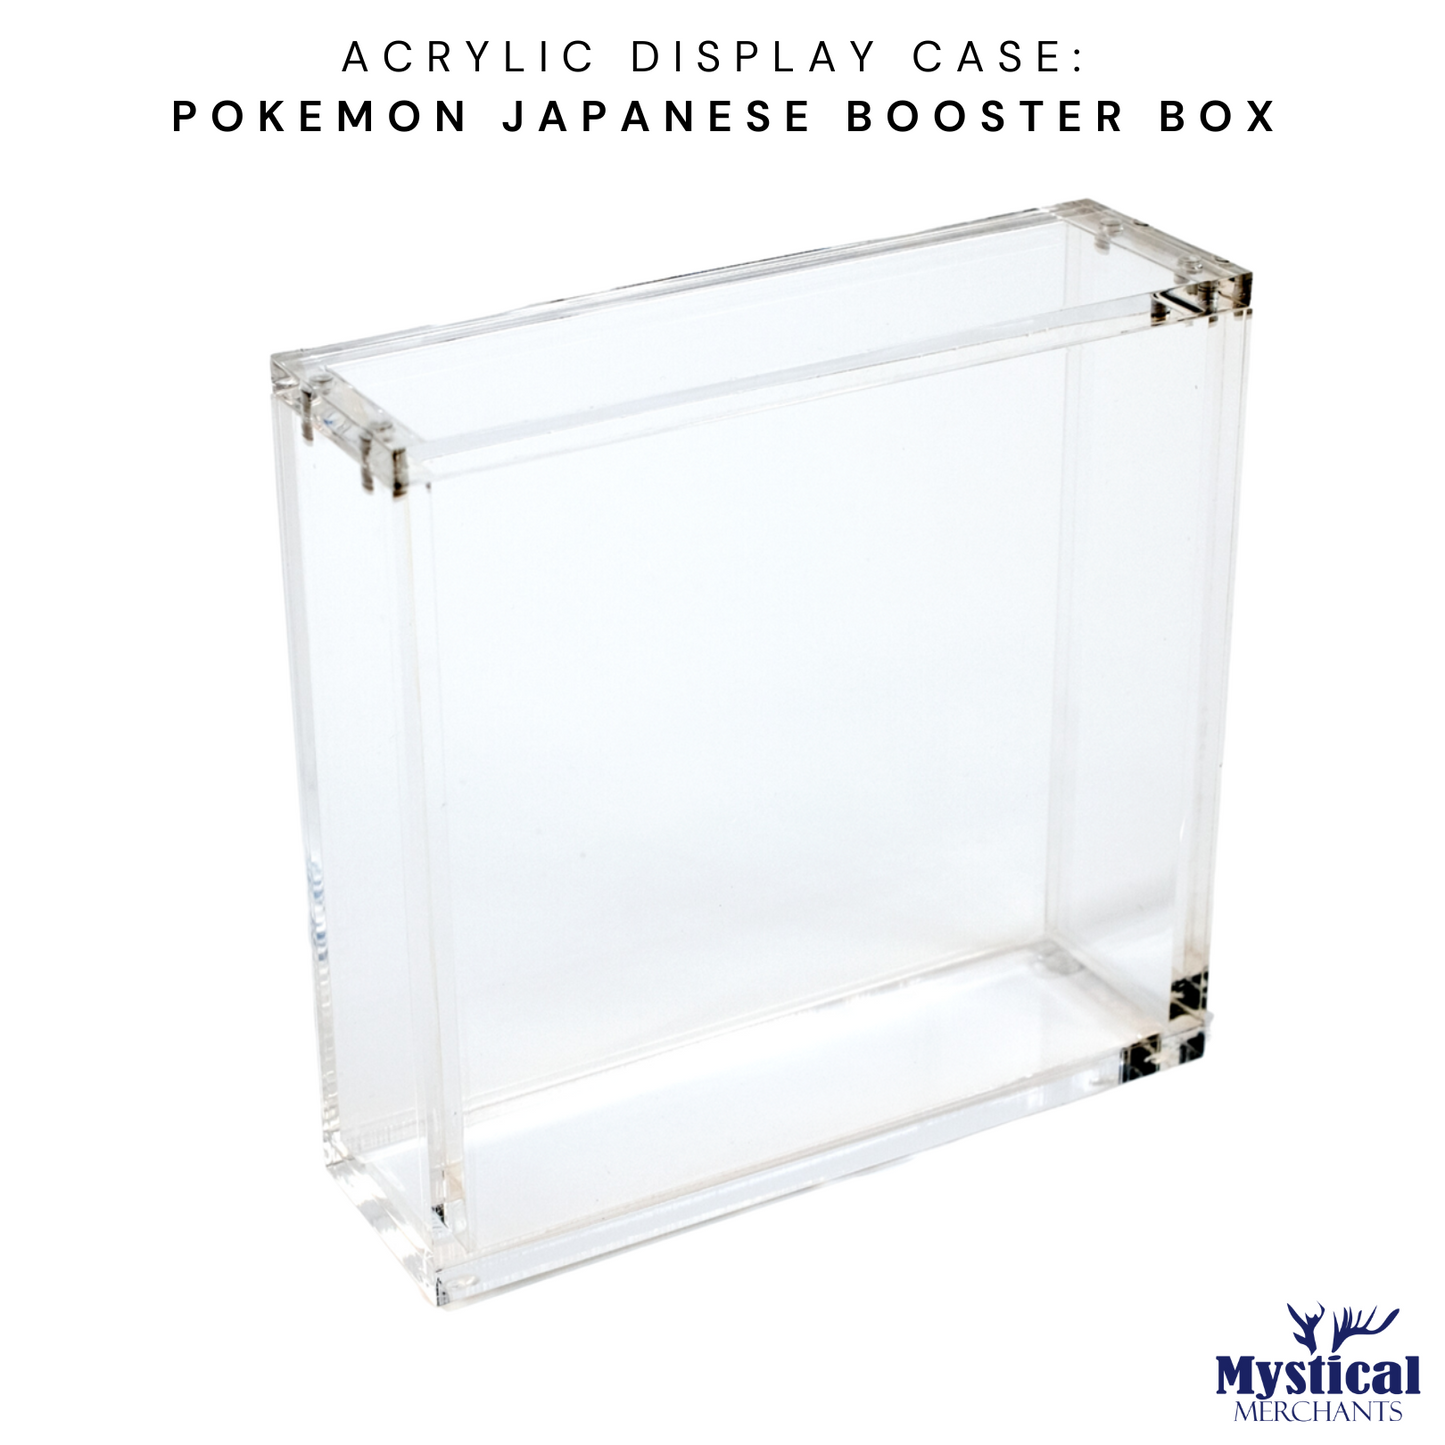 Acrylic Case for Japanese Pokémon Booster Box